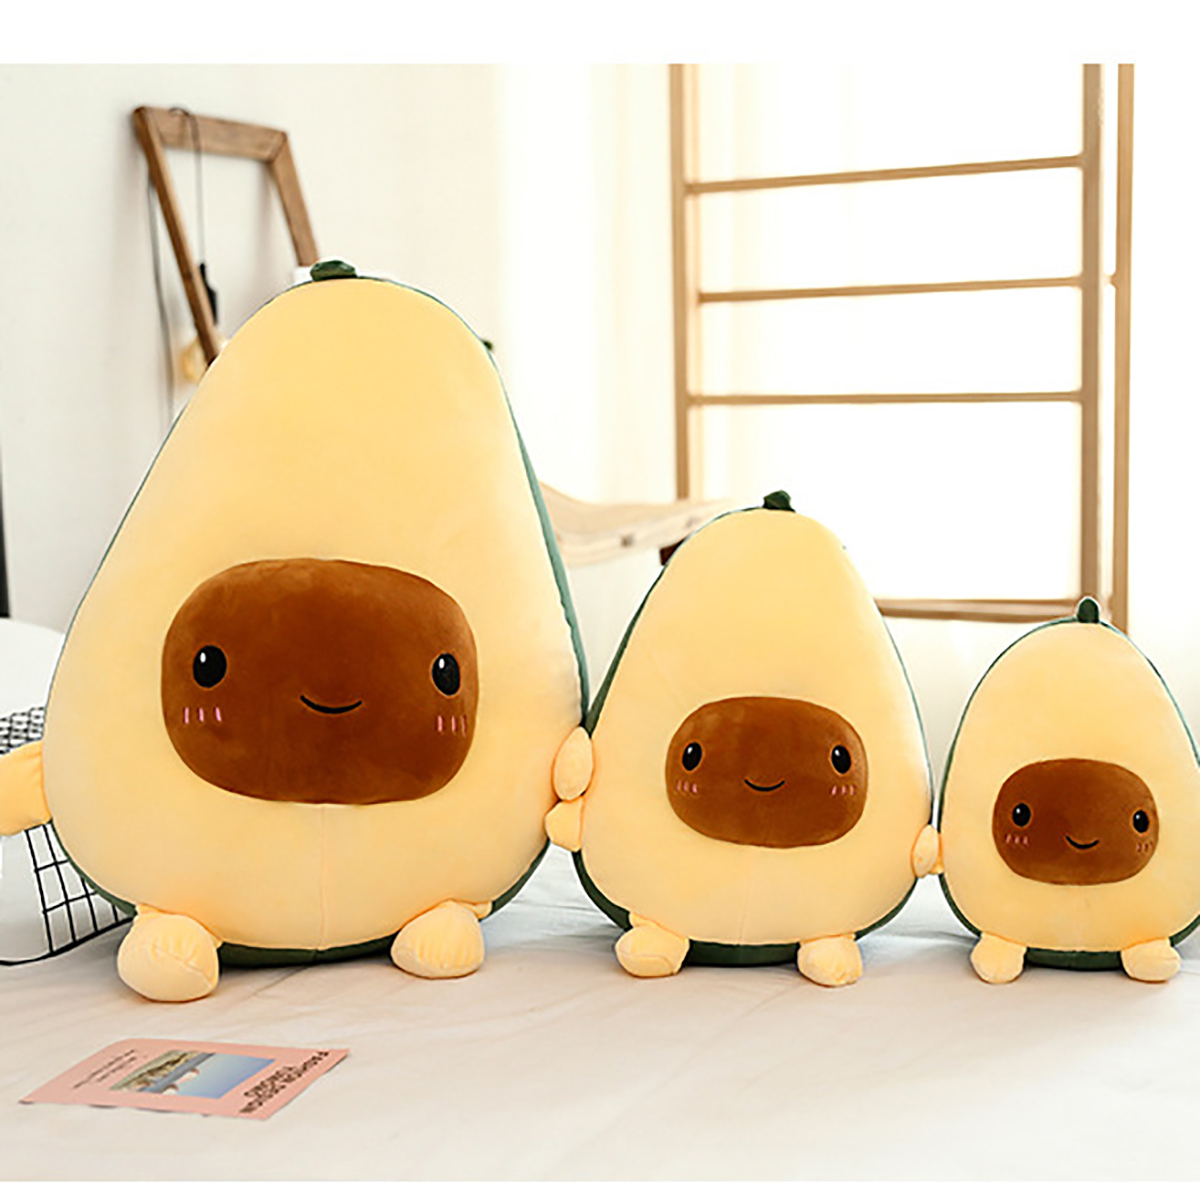 253560CM-Cute-Avocado-Stuffed-Plush-Toy-Soft-Baby-Doll-Cartoon-Fruit-Pillow-Sofa-Cushion-for-Kids-Bi-1627709-1